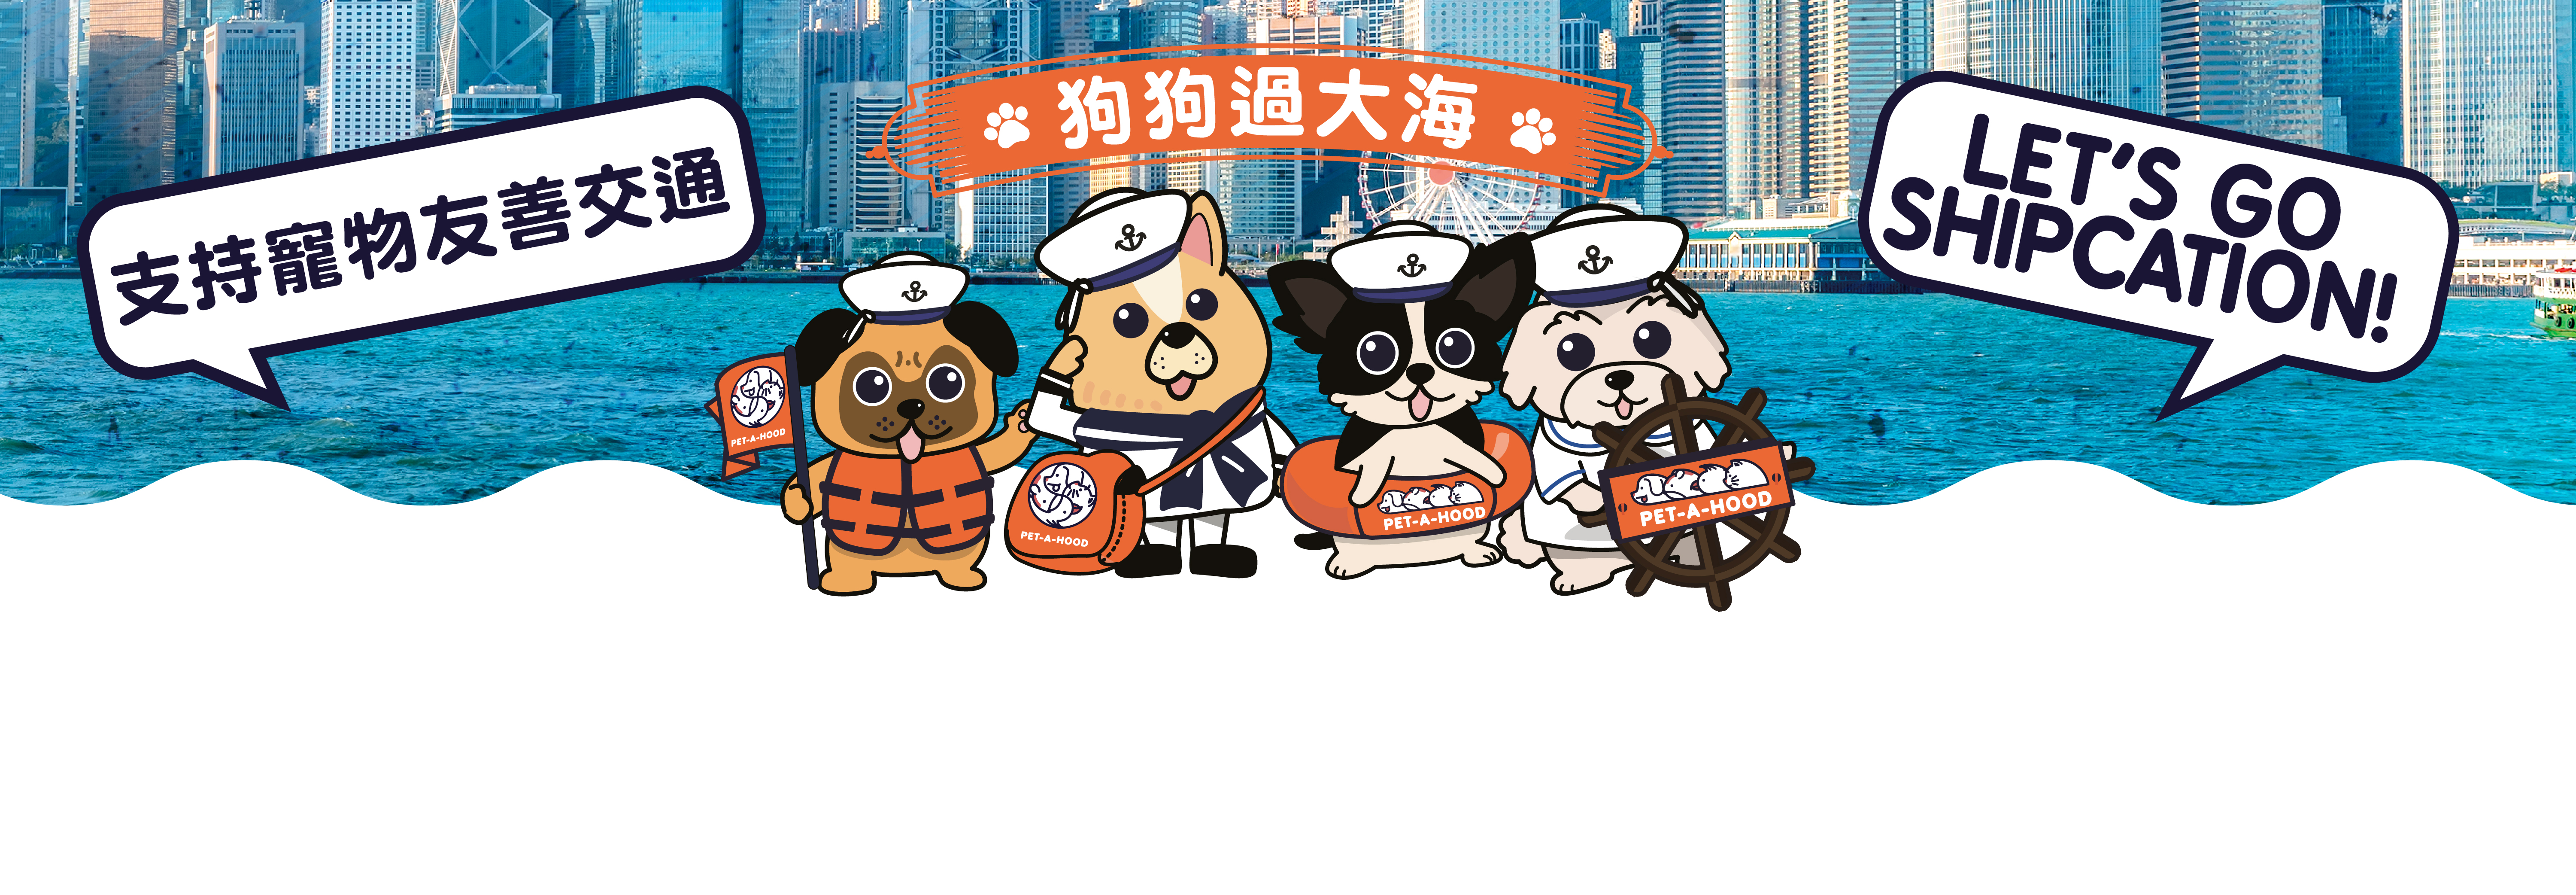 SPCA Dog Dog Shipcation｜PET-A-HOOD Theme Event Photo Download